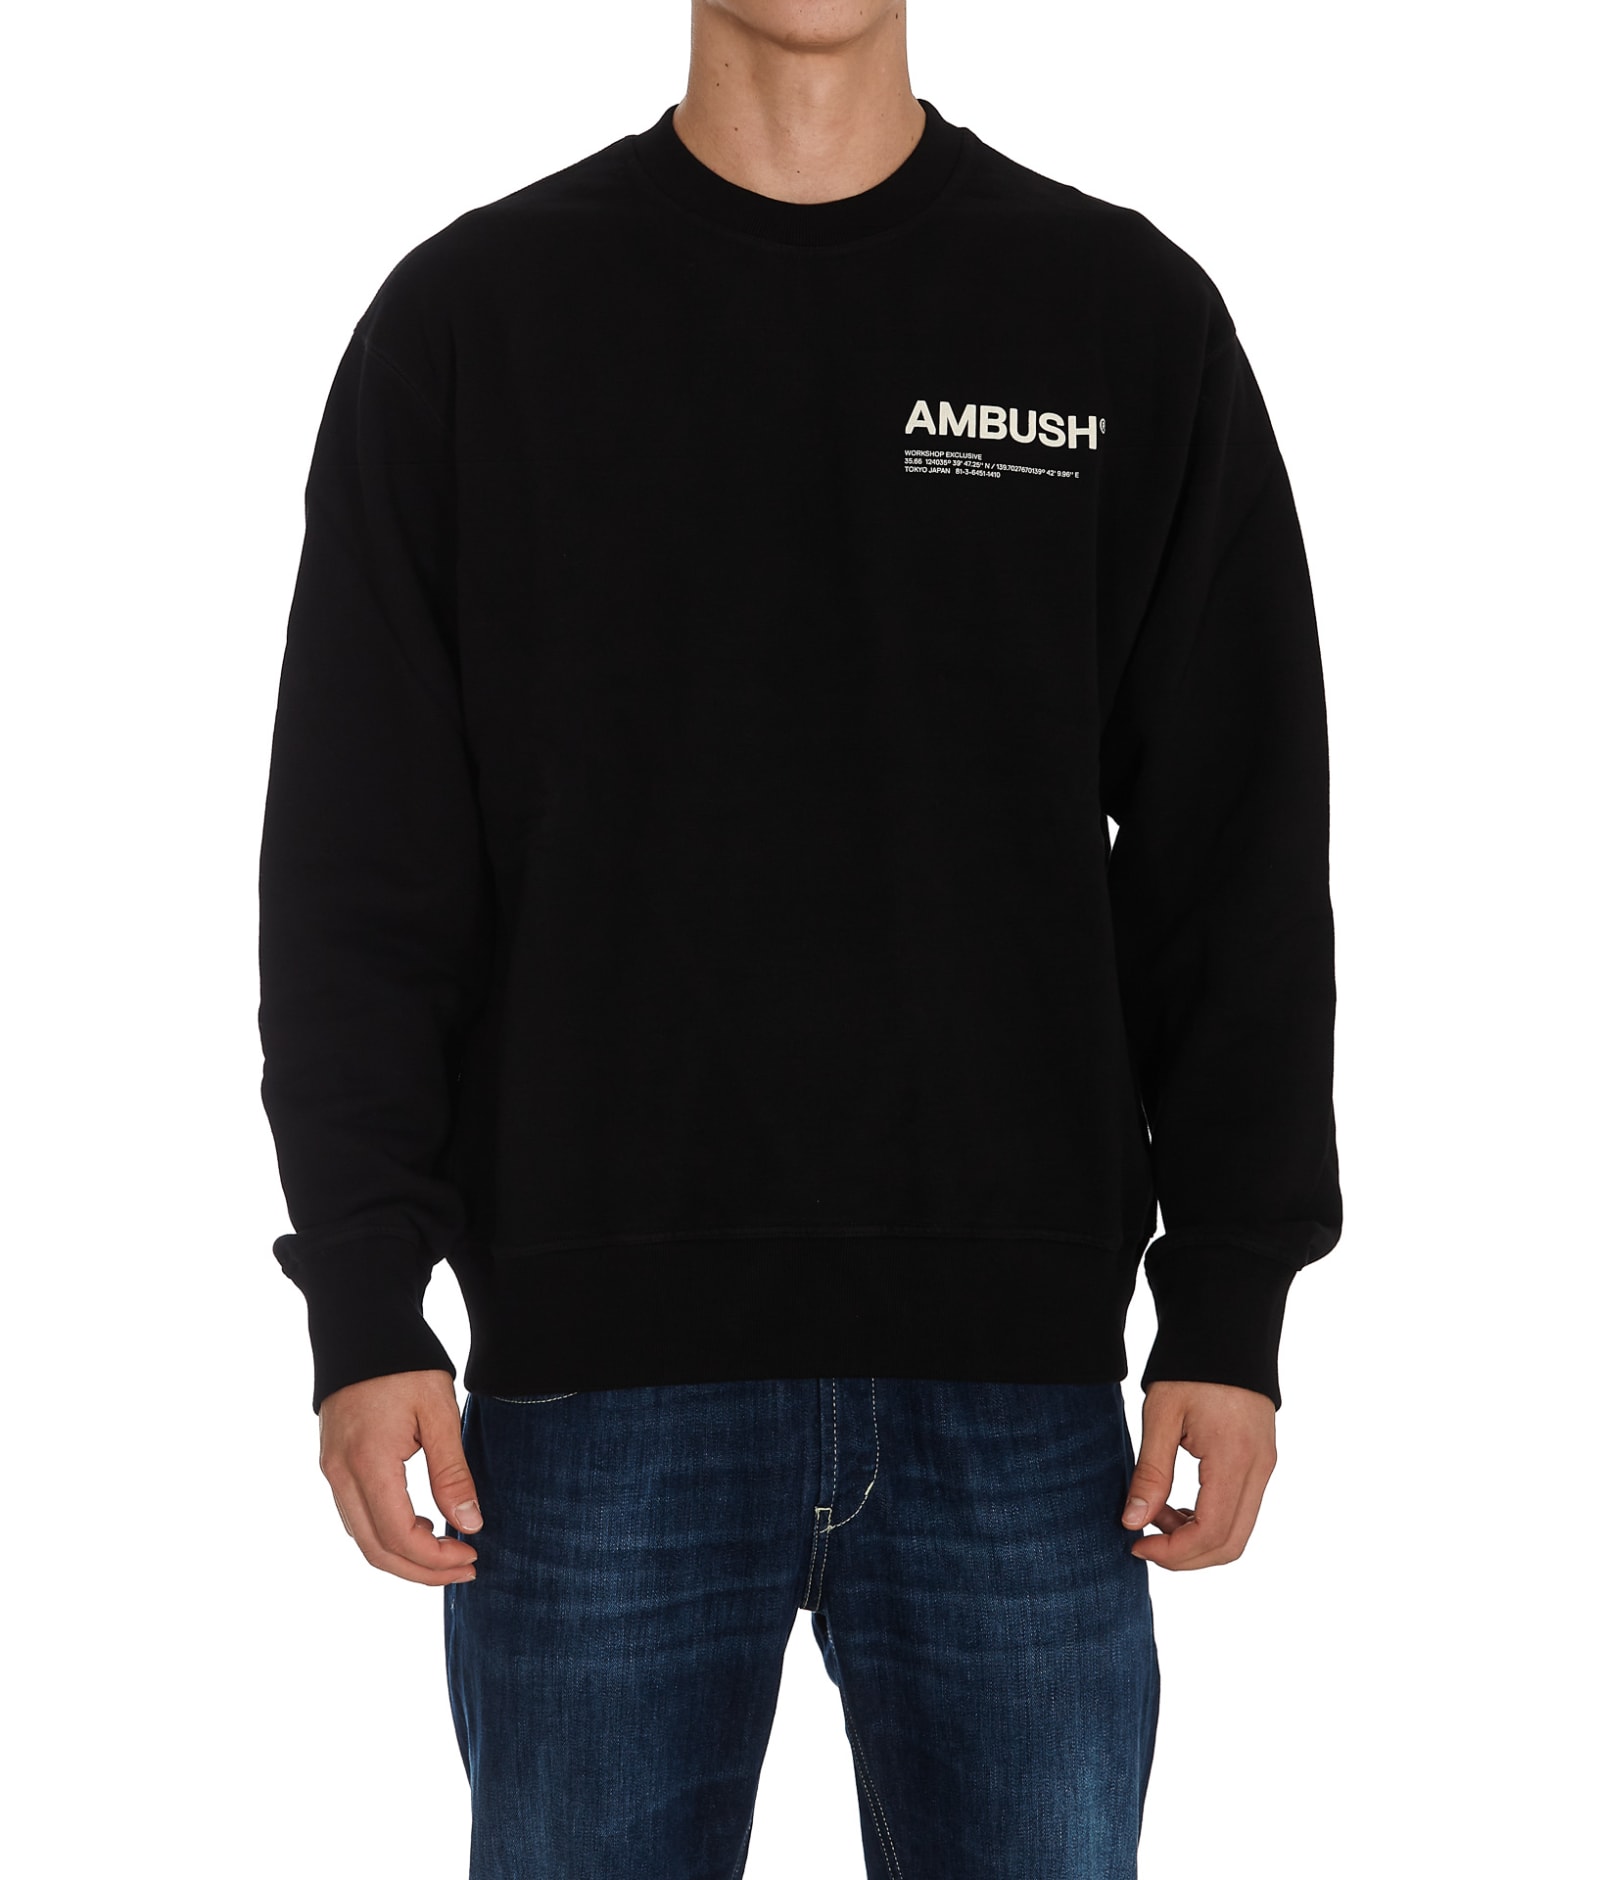 Ambush Workshop Sweater